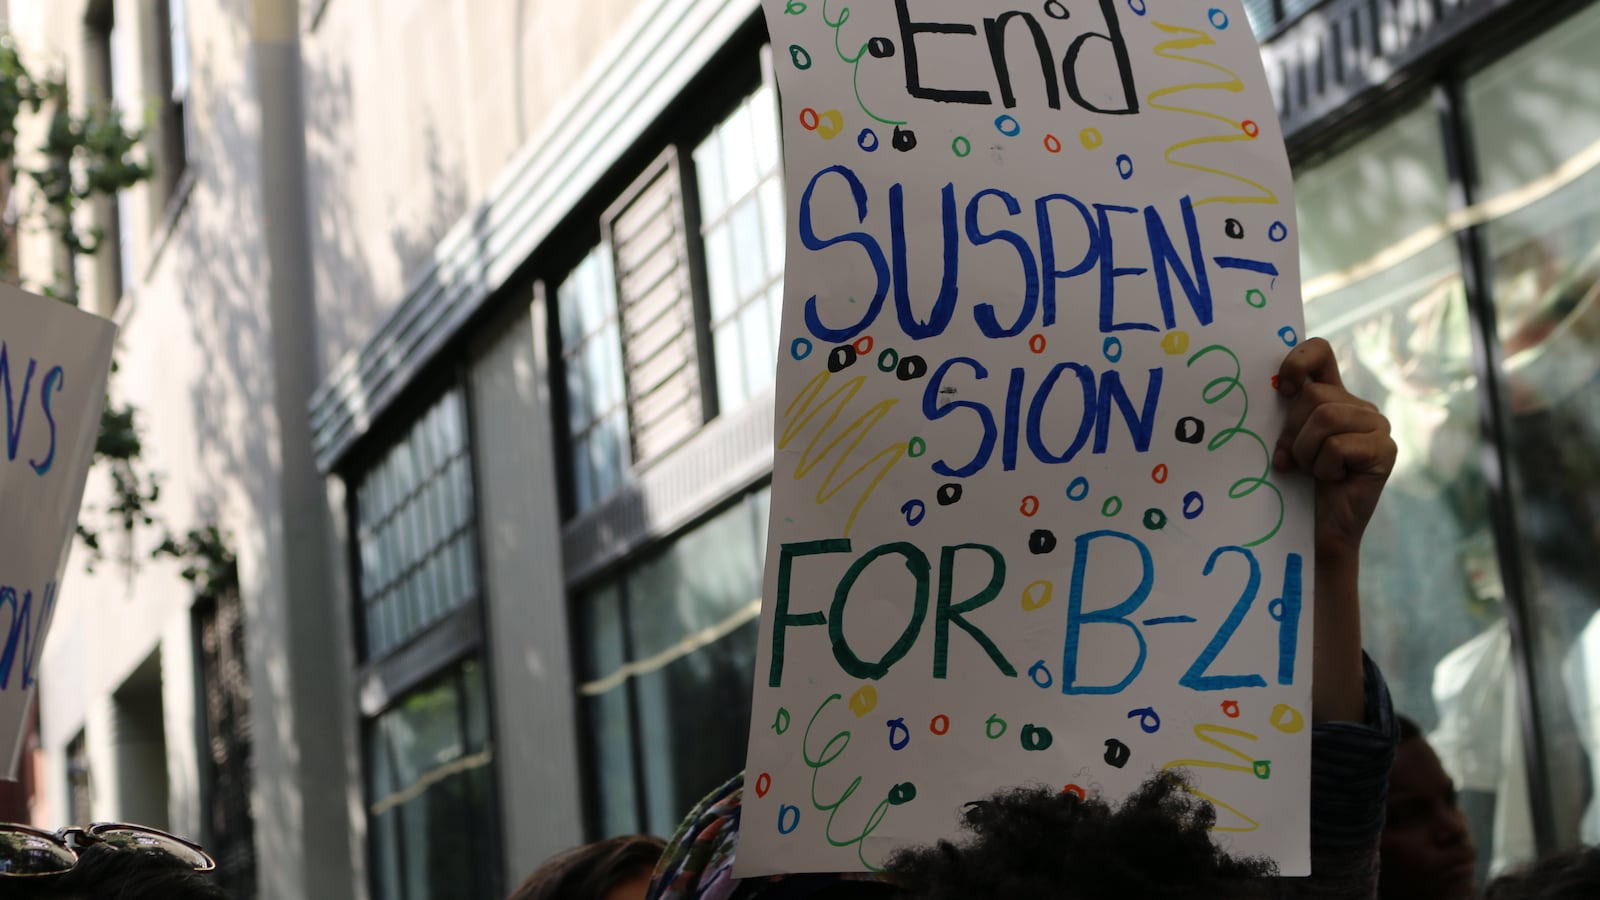 Advocates protest school suspension policy, including insubordination or "B-21."